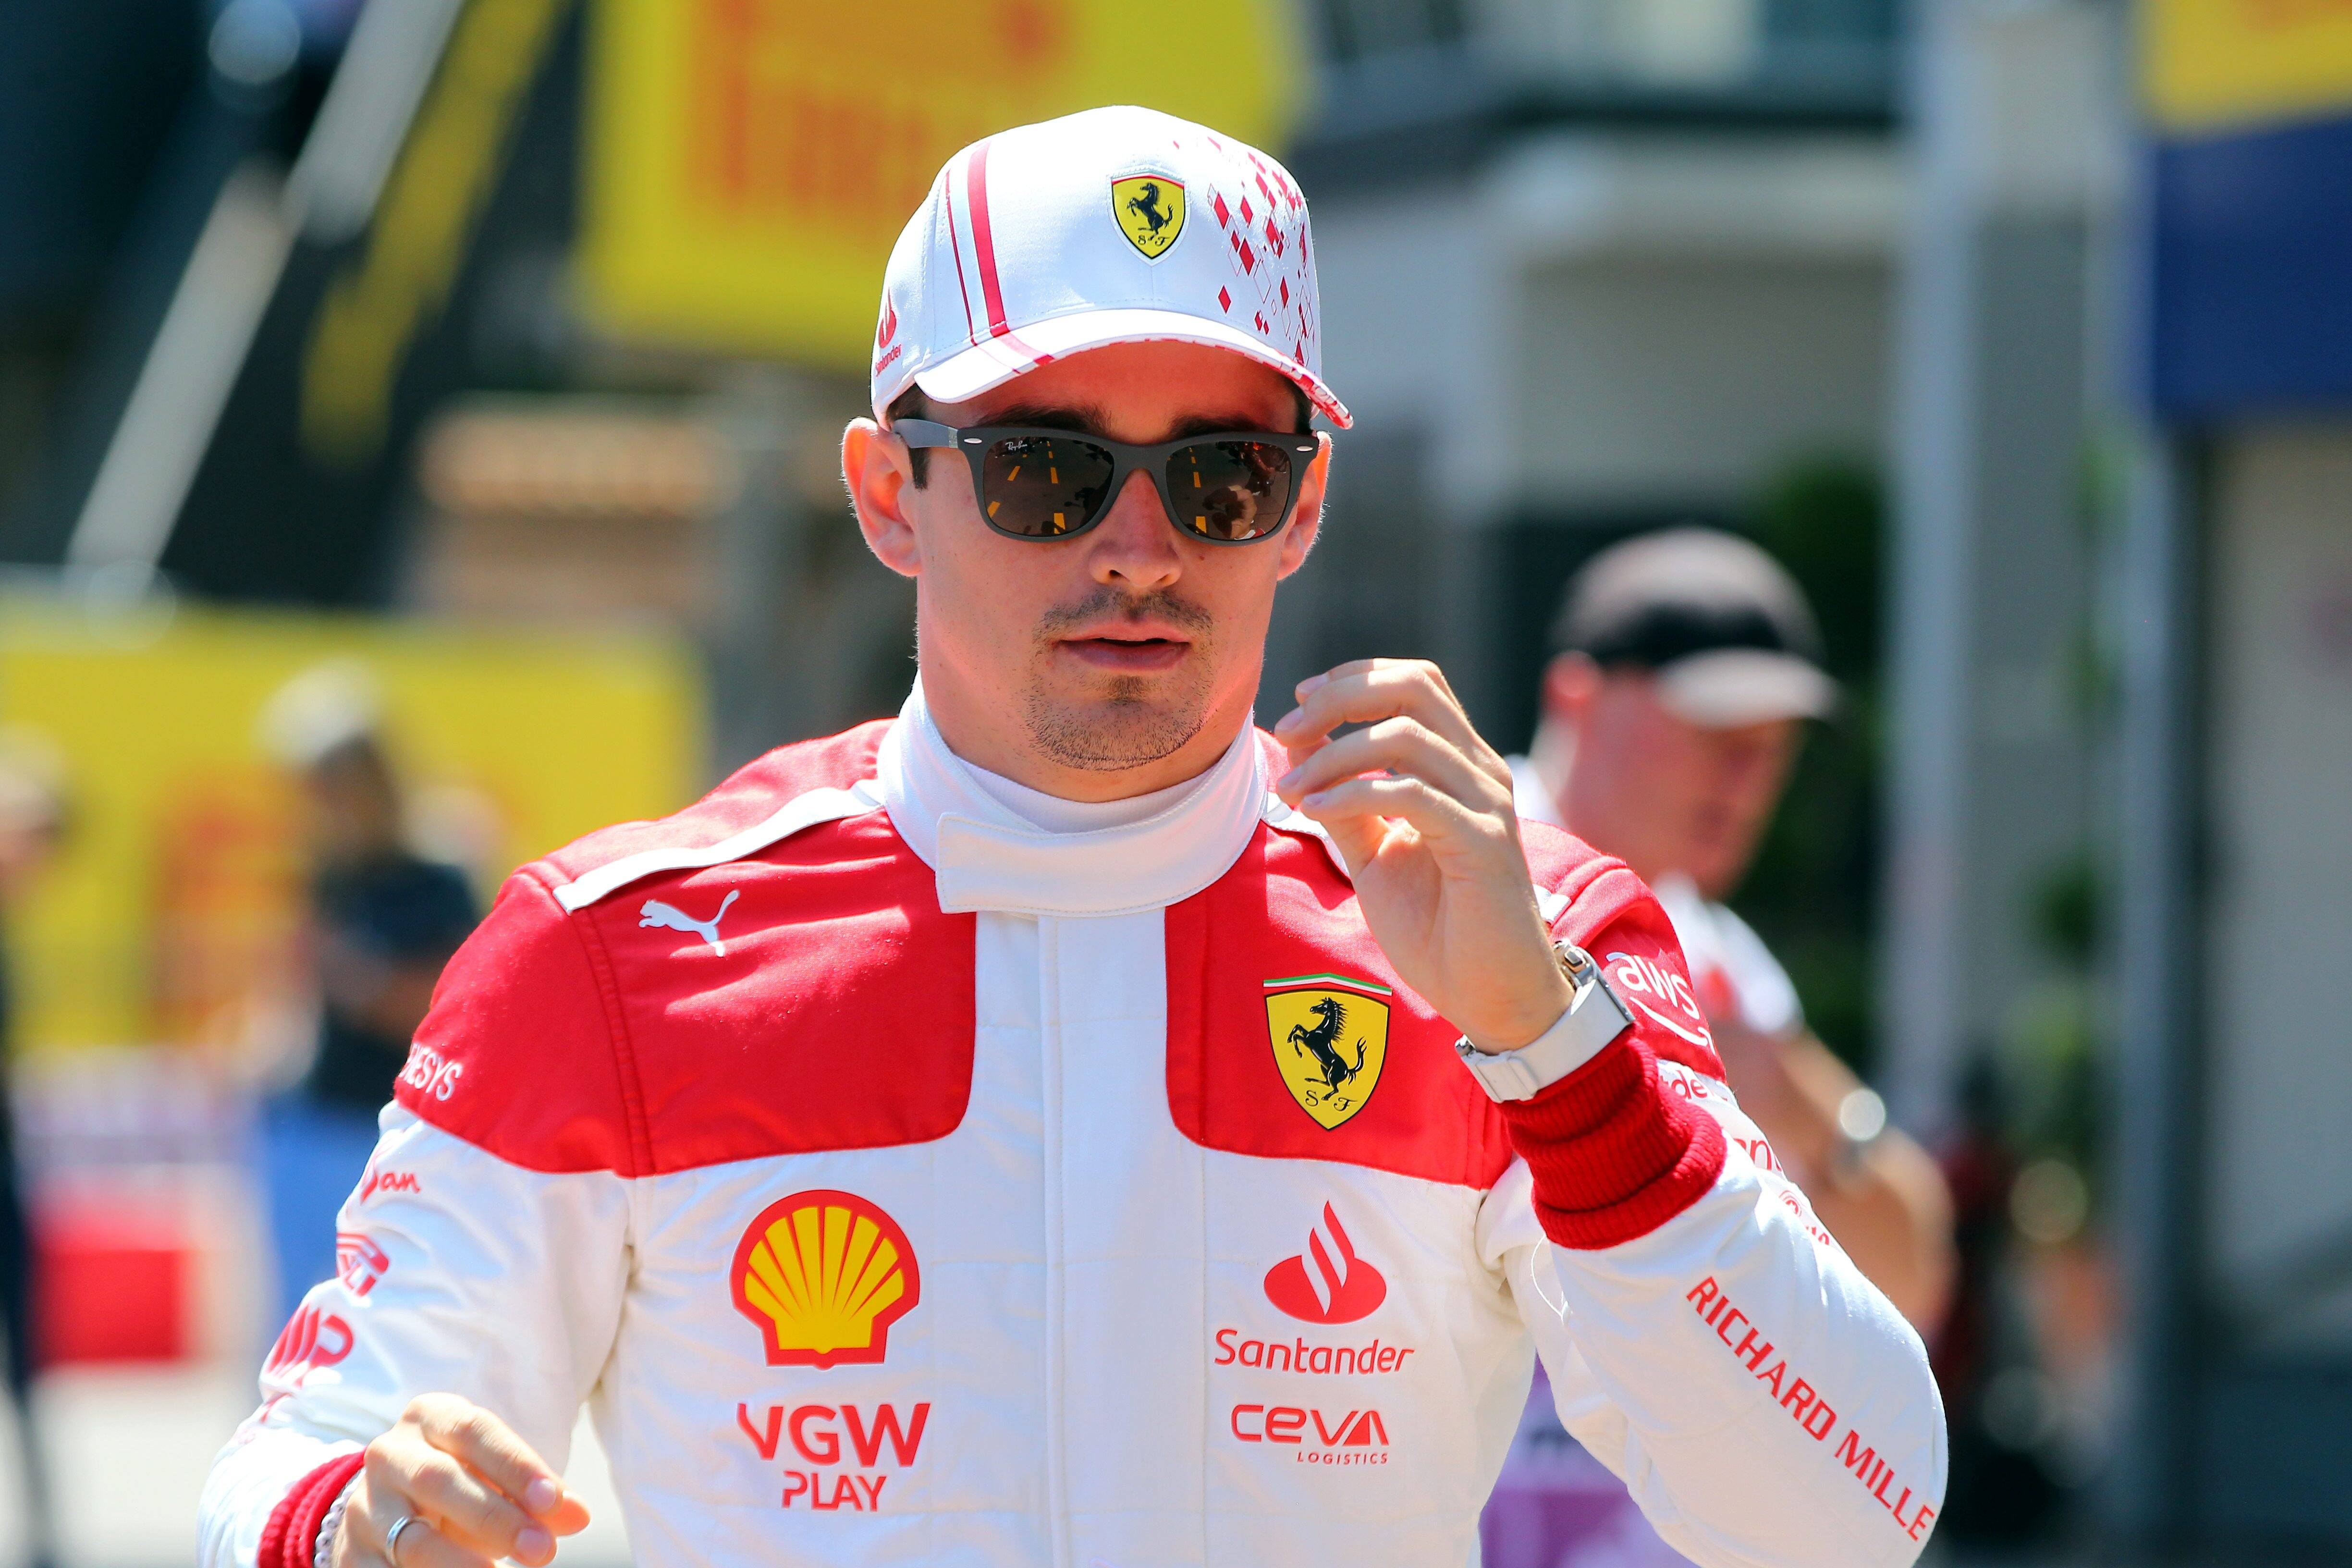 Charles Leclerc prolonge chez Ferrari jusqu'en 2029 - Monaco Hebdo